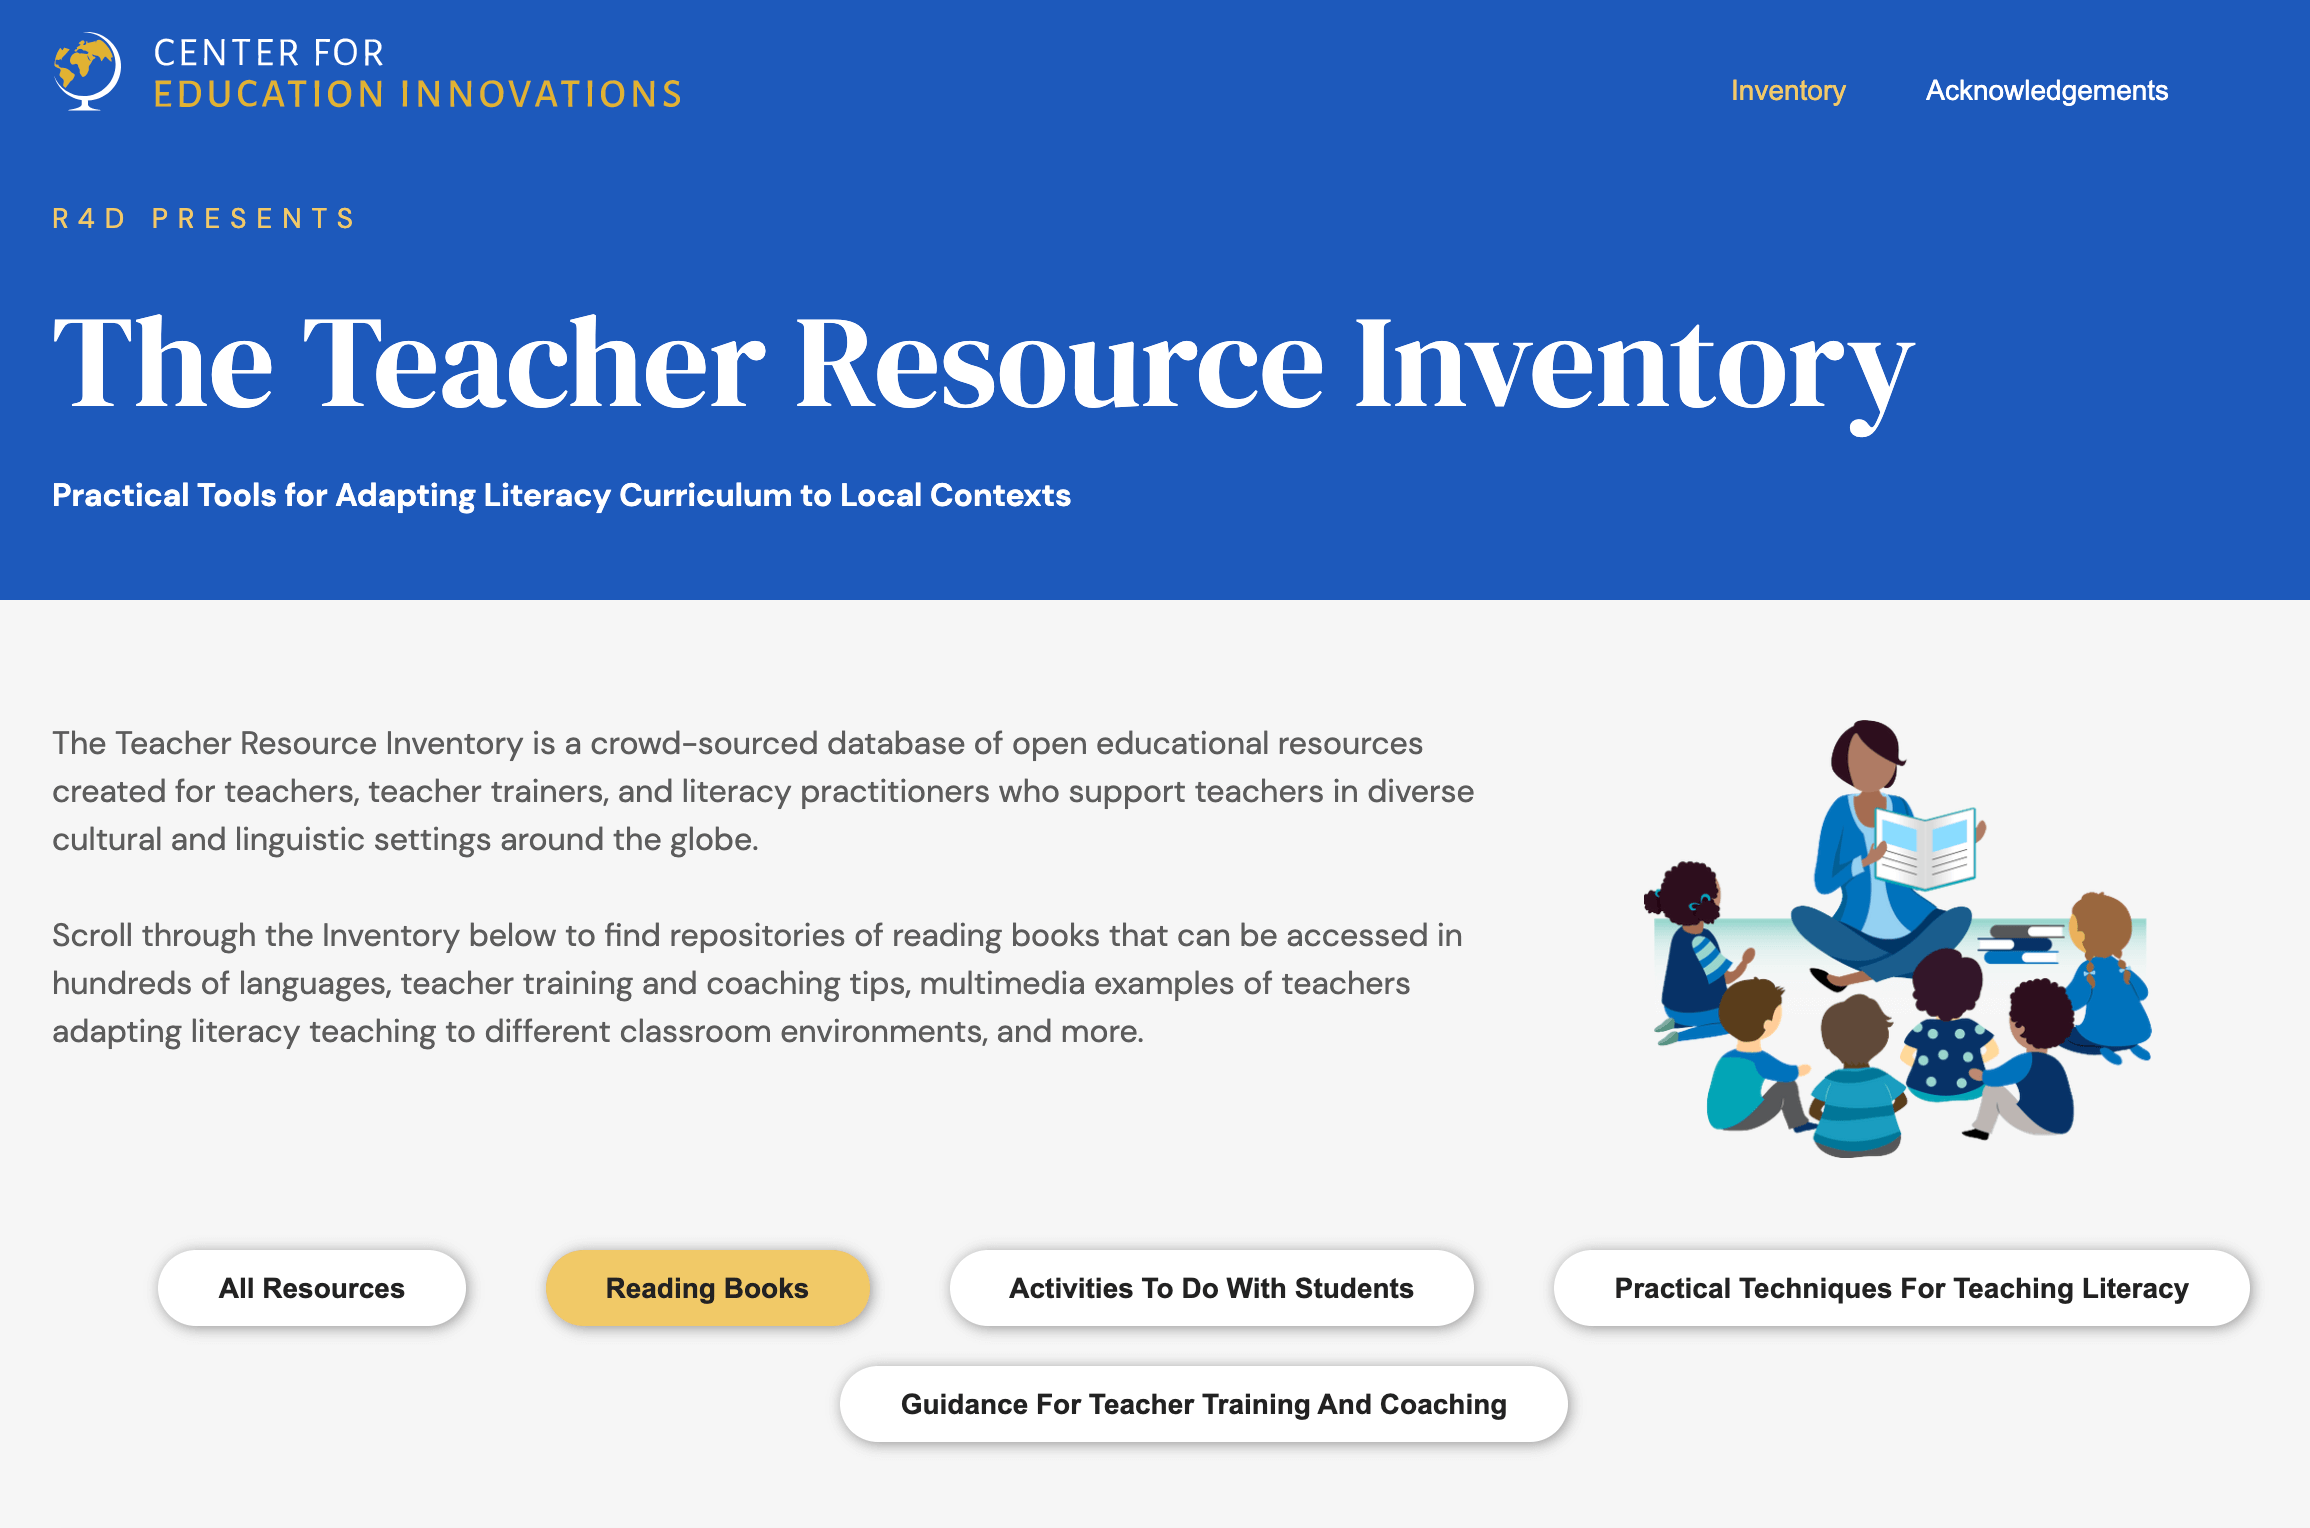 The Teacher Resource Inventory